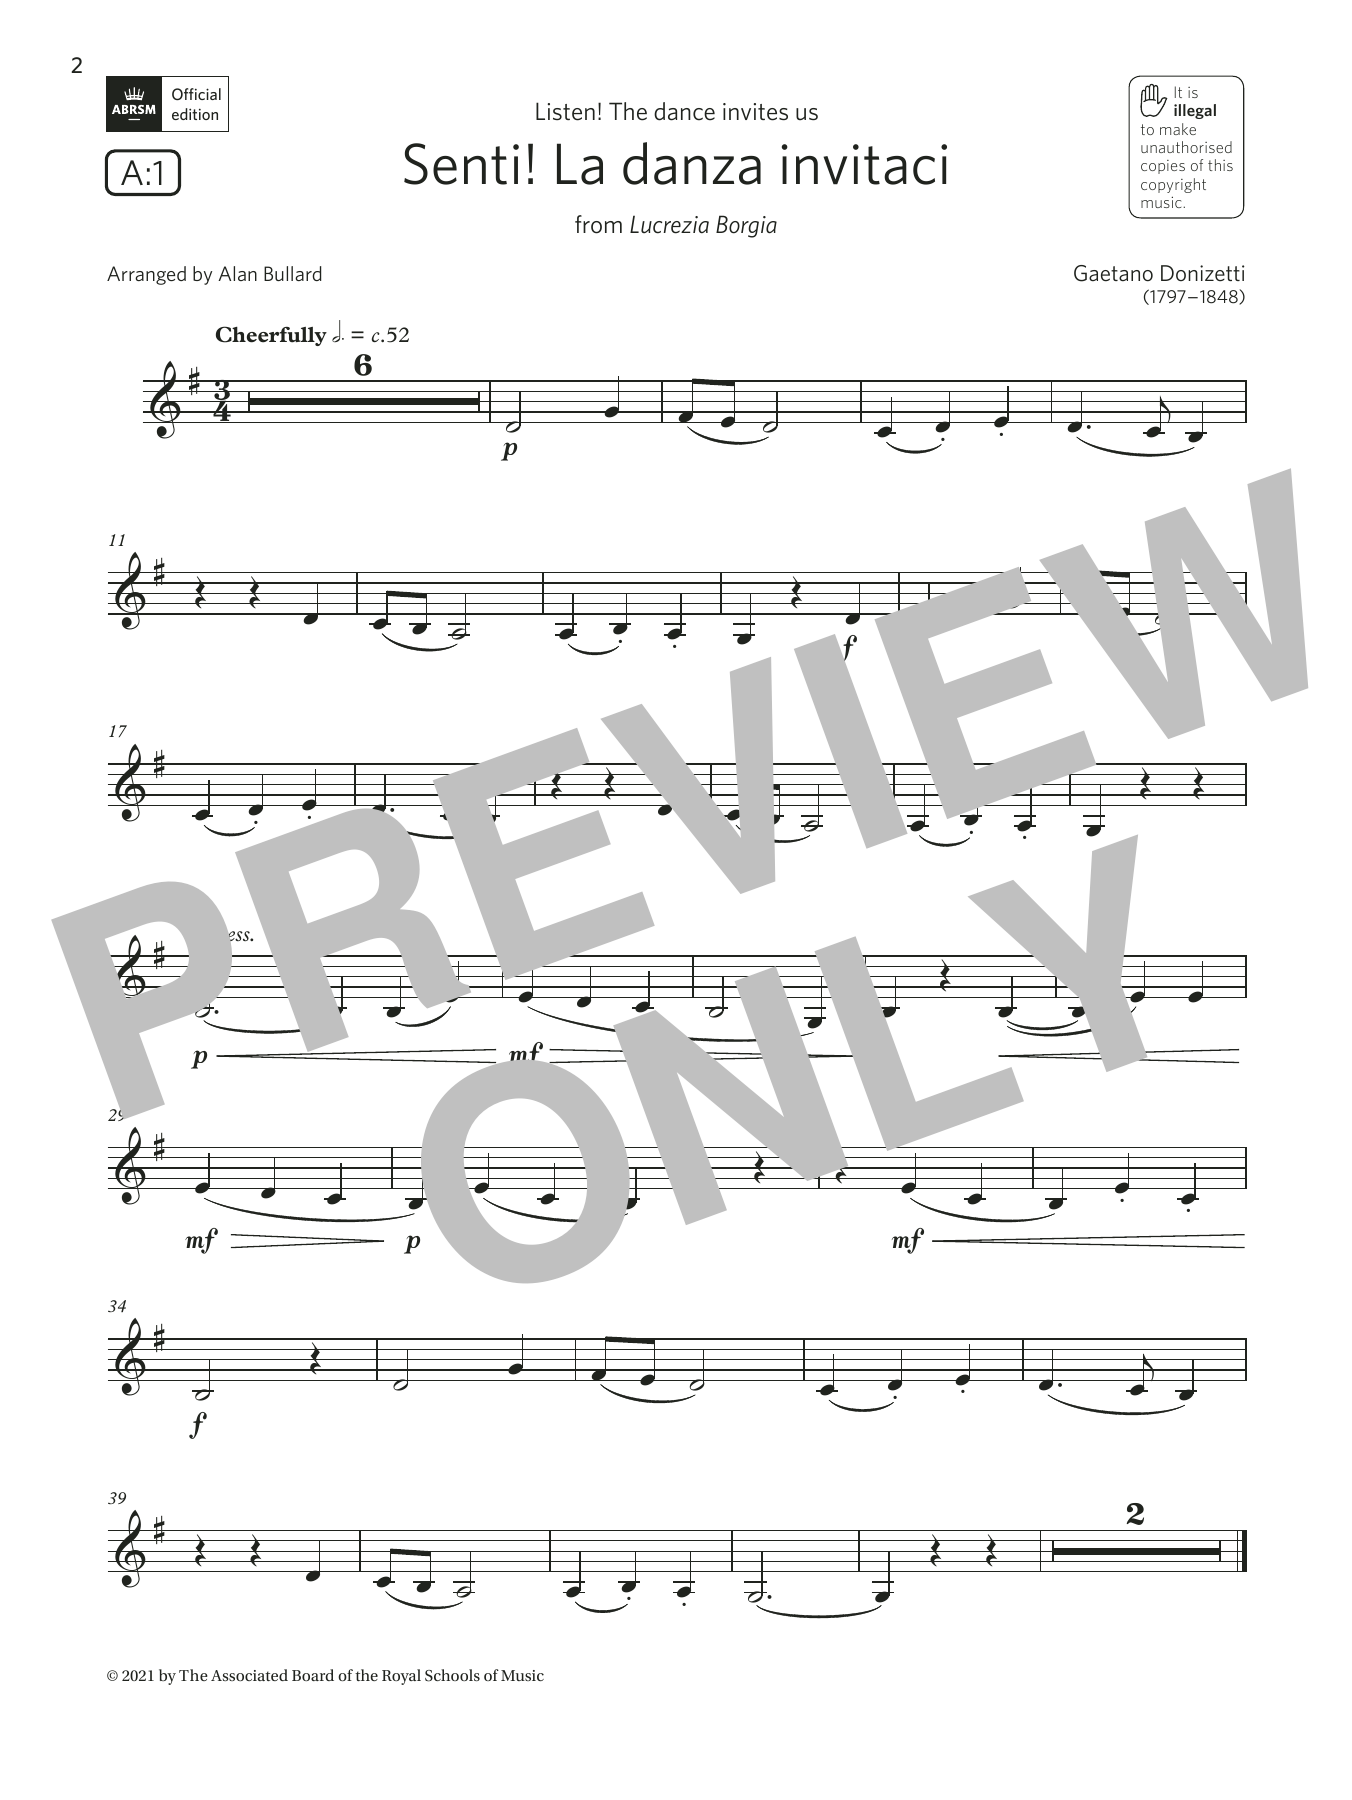 Gaetano Donizetti Senti! La danza invitaci (Grade 1 List A1 from the ABRSM Clarinet syllabus from 2022) Sheet Music Notes & Chords for Clarinet Solo - Download or Print PDF